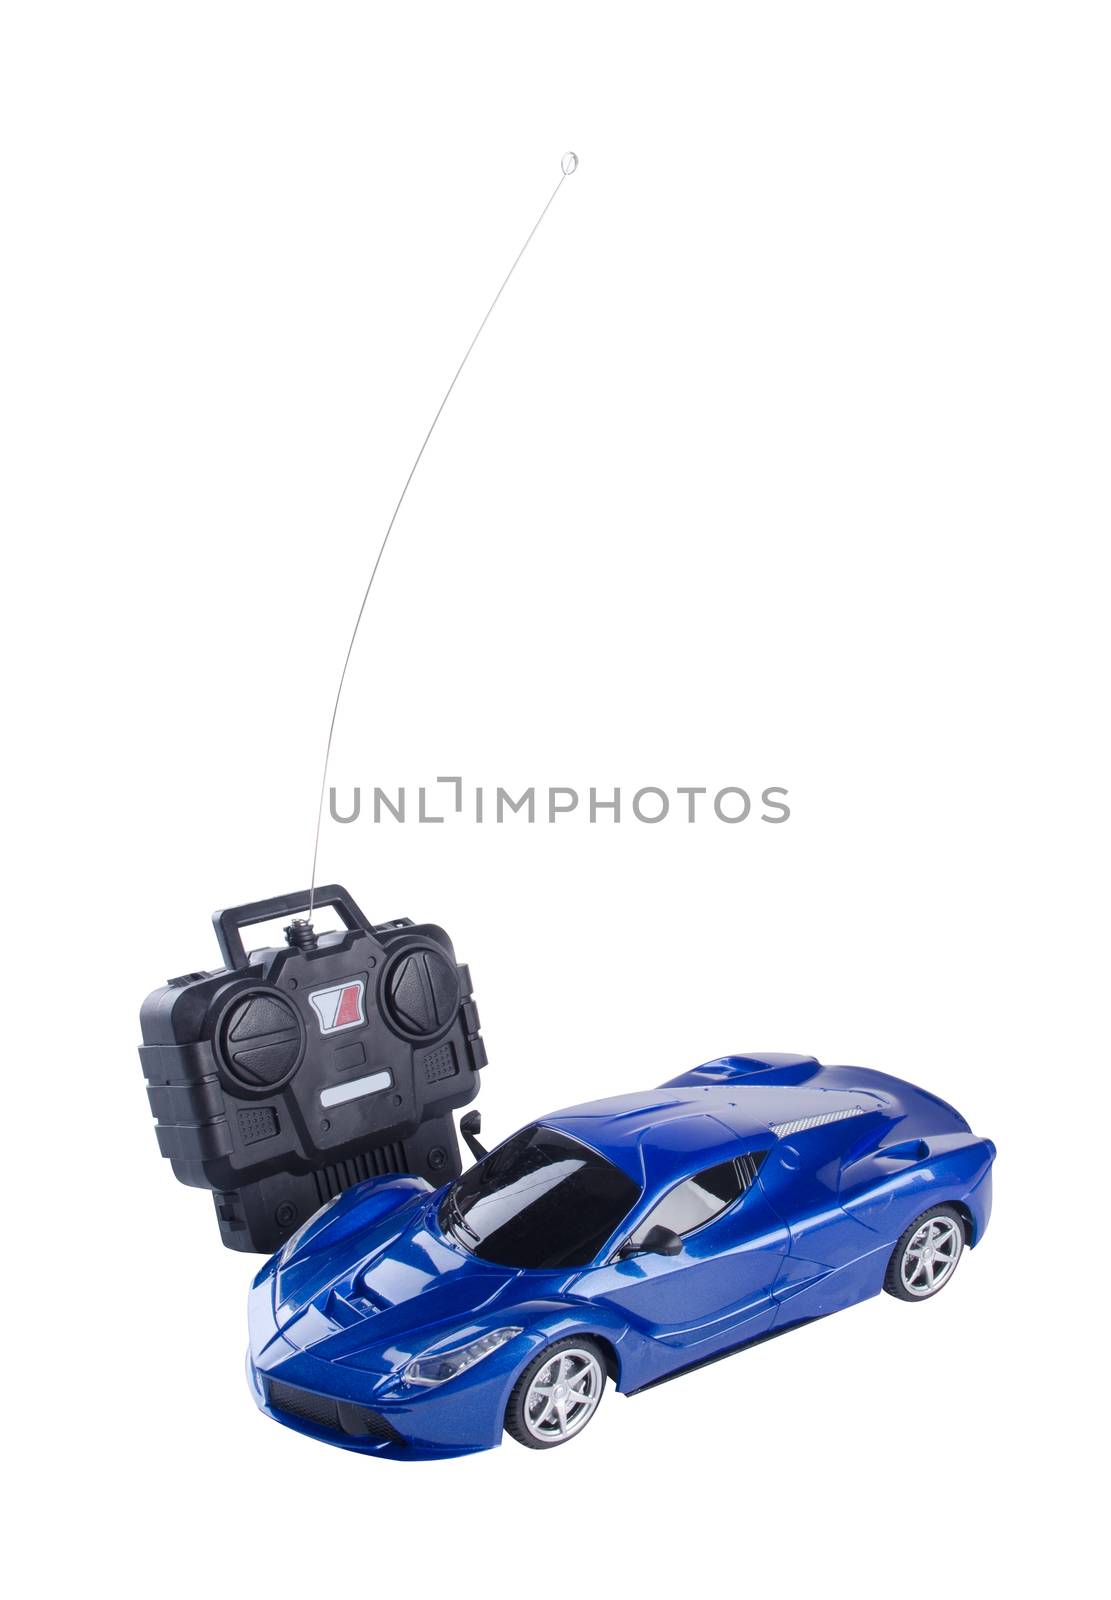 toy. toy car remote control on a background. by heinteh